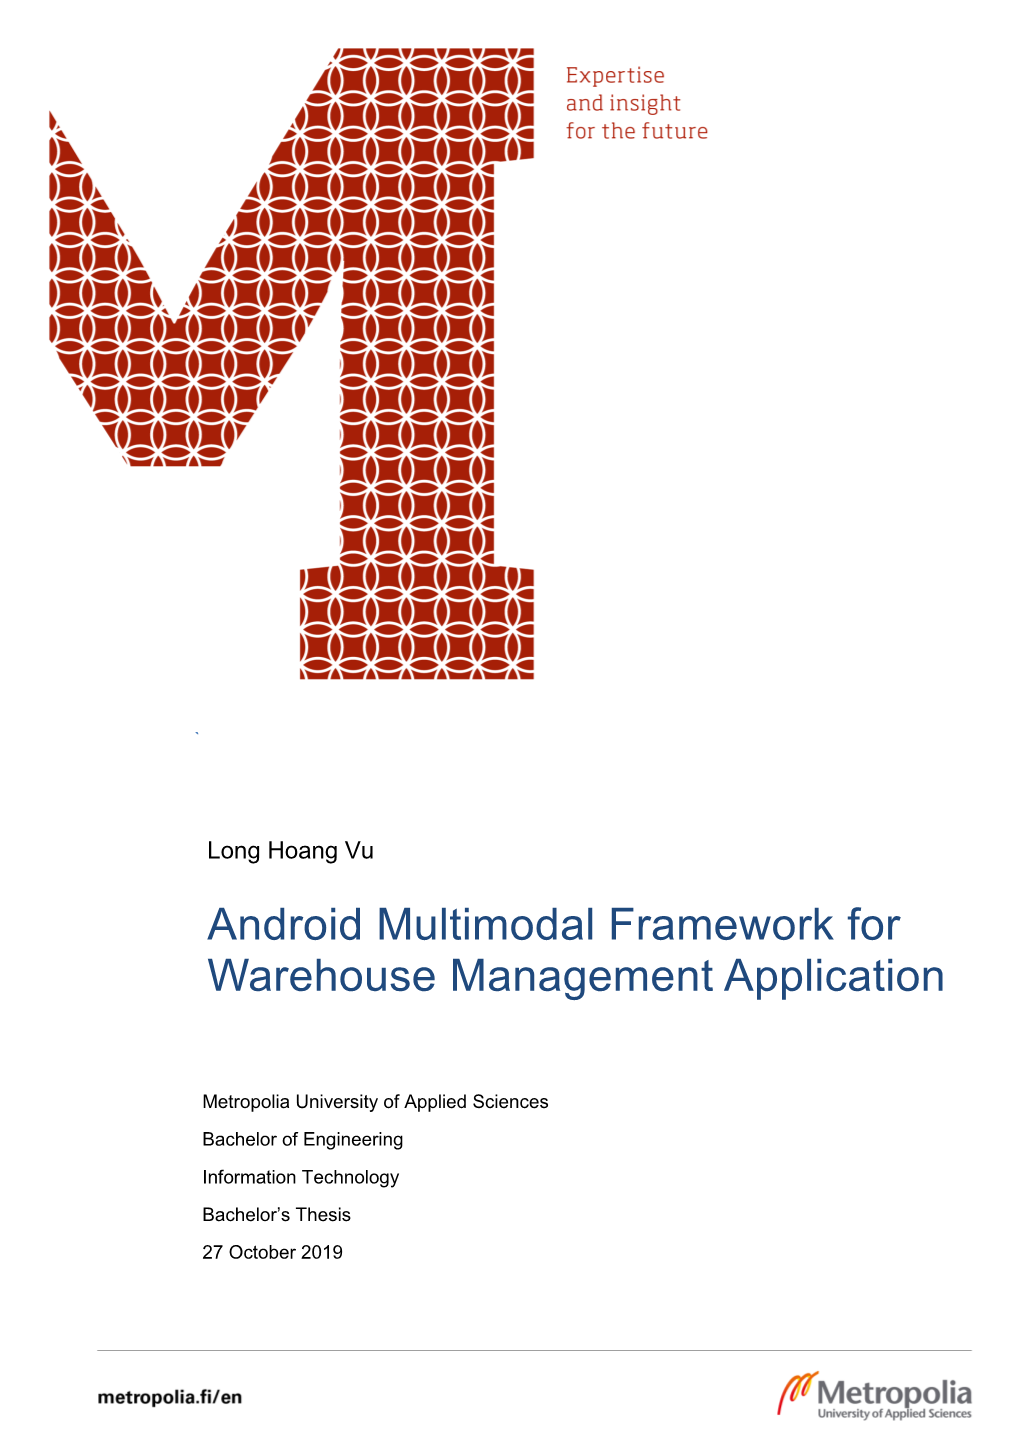 Android Multimodal Framework for Warehouse Management Application